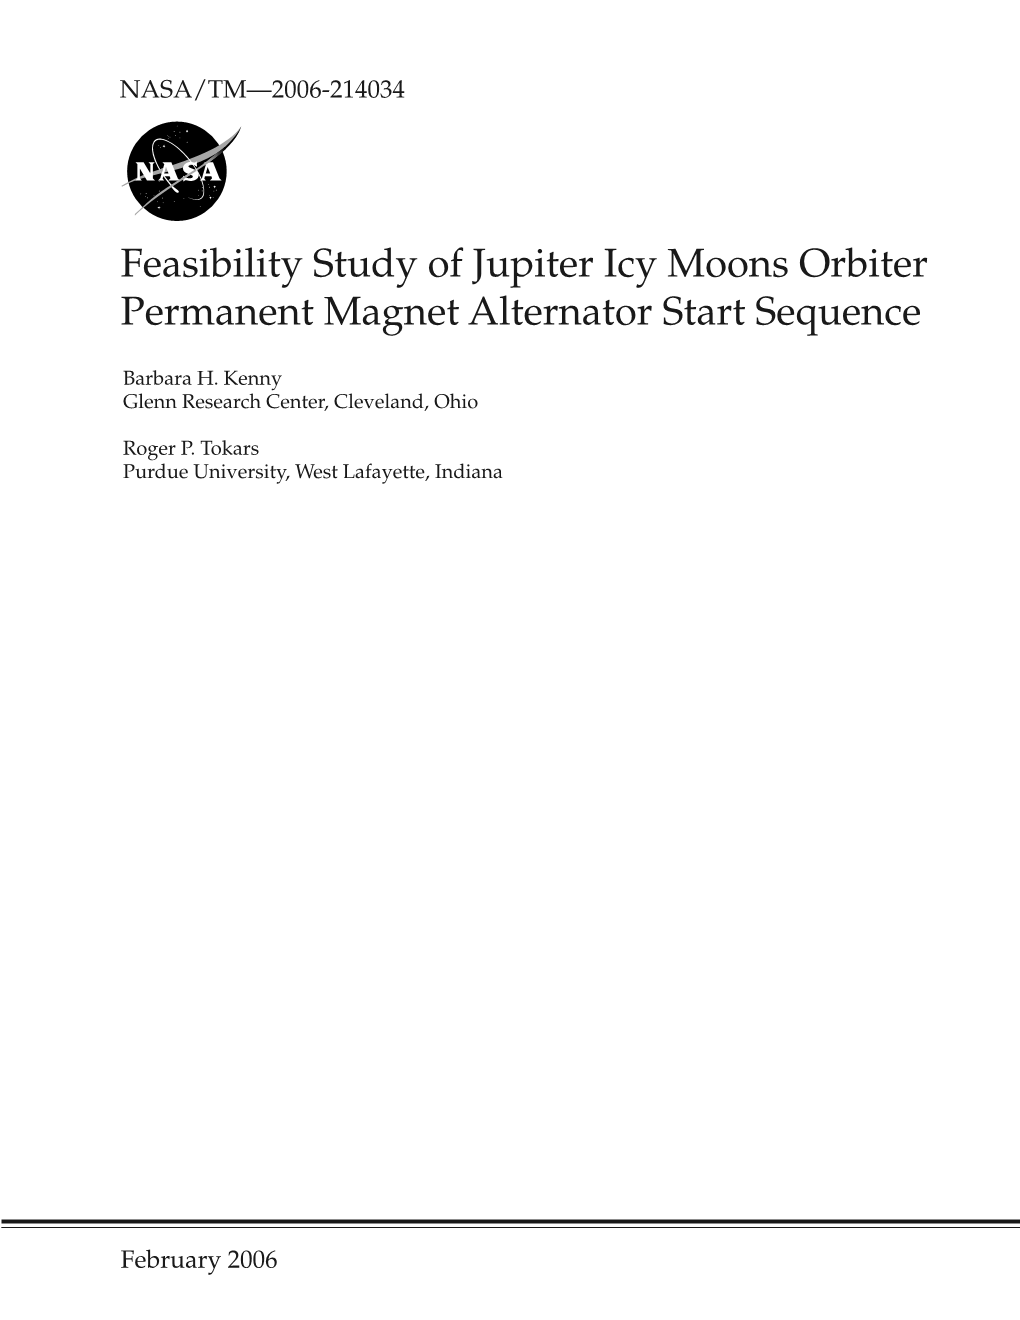 Feasibility Study of Jupiter Icy Moons Orbiter Permanent Magnet Alternator Start Sequence